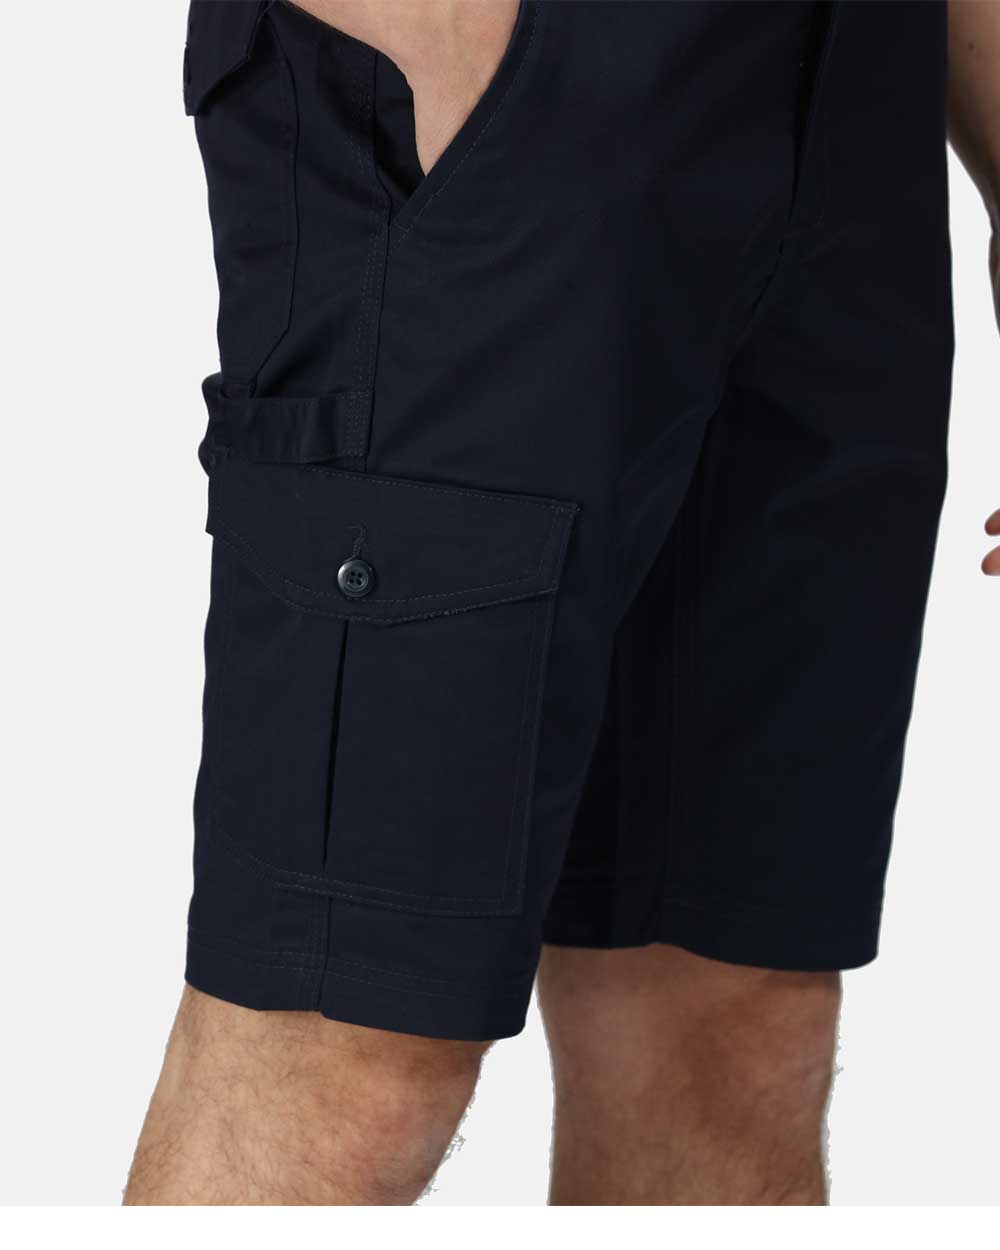  Regatta Pro Cargo Shorts in Black 